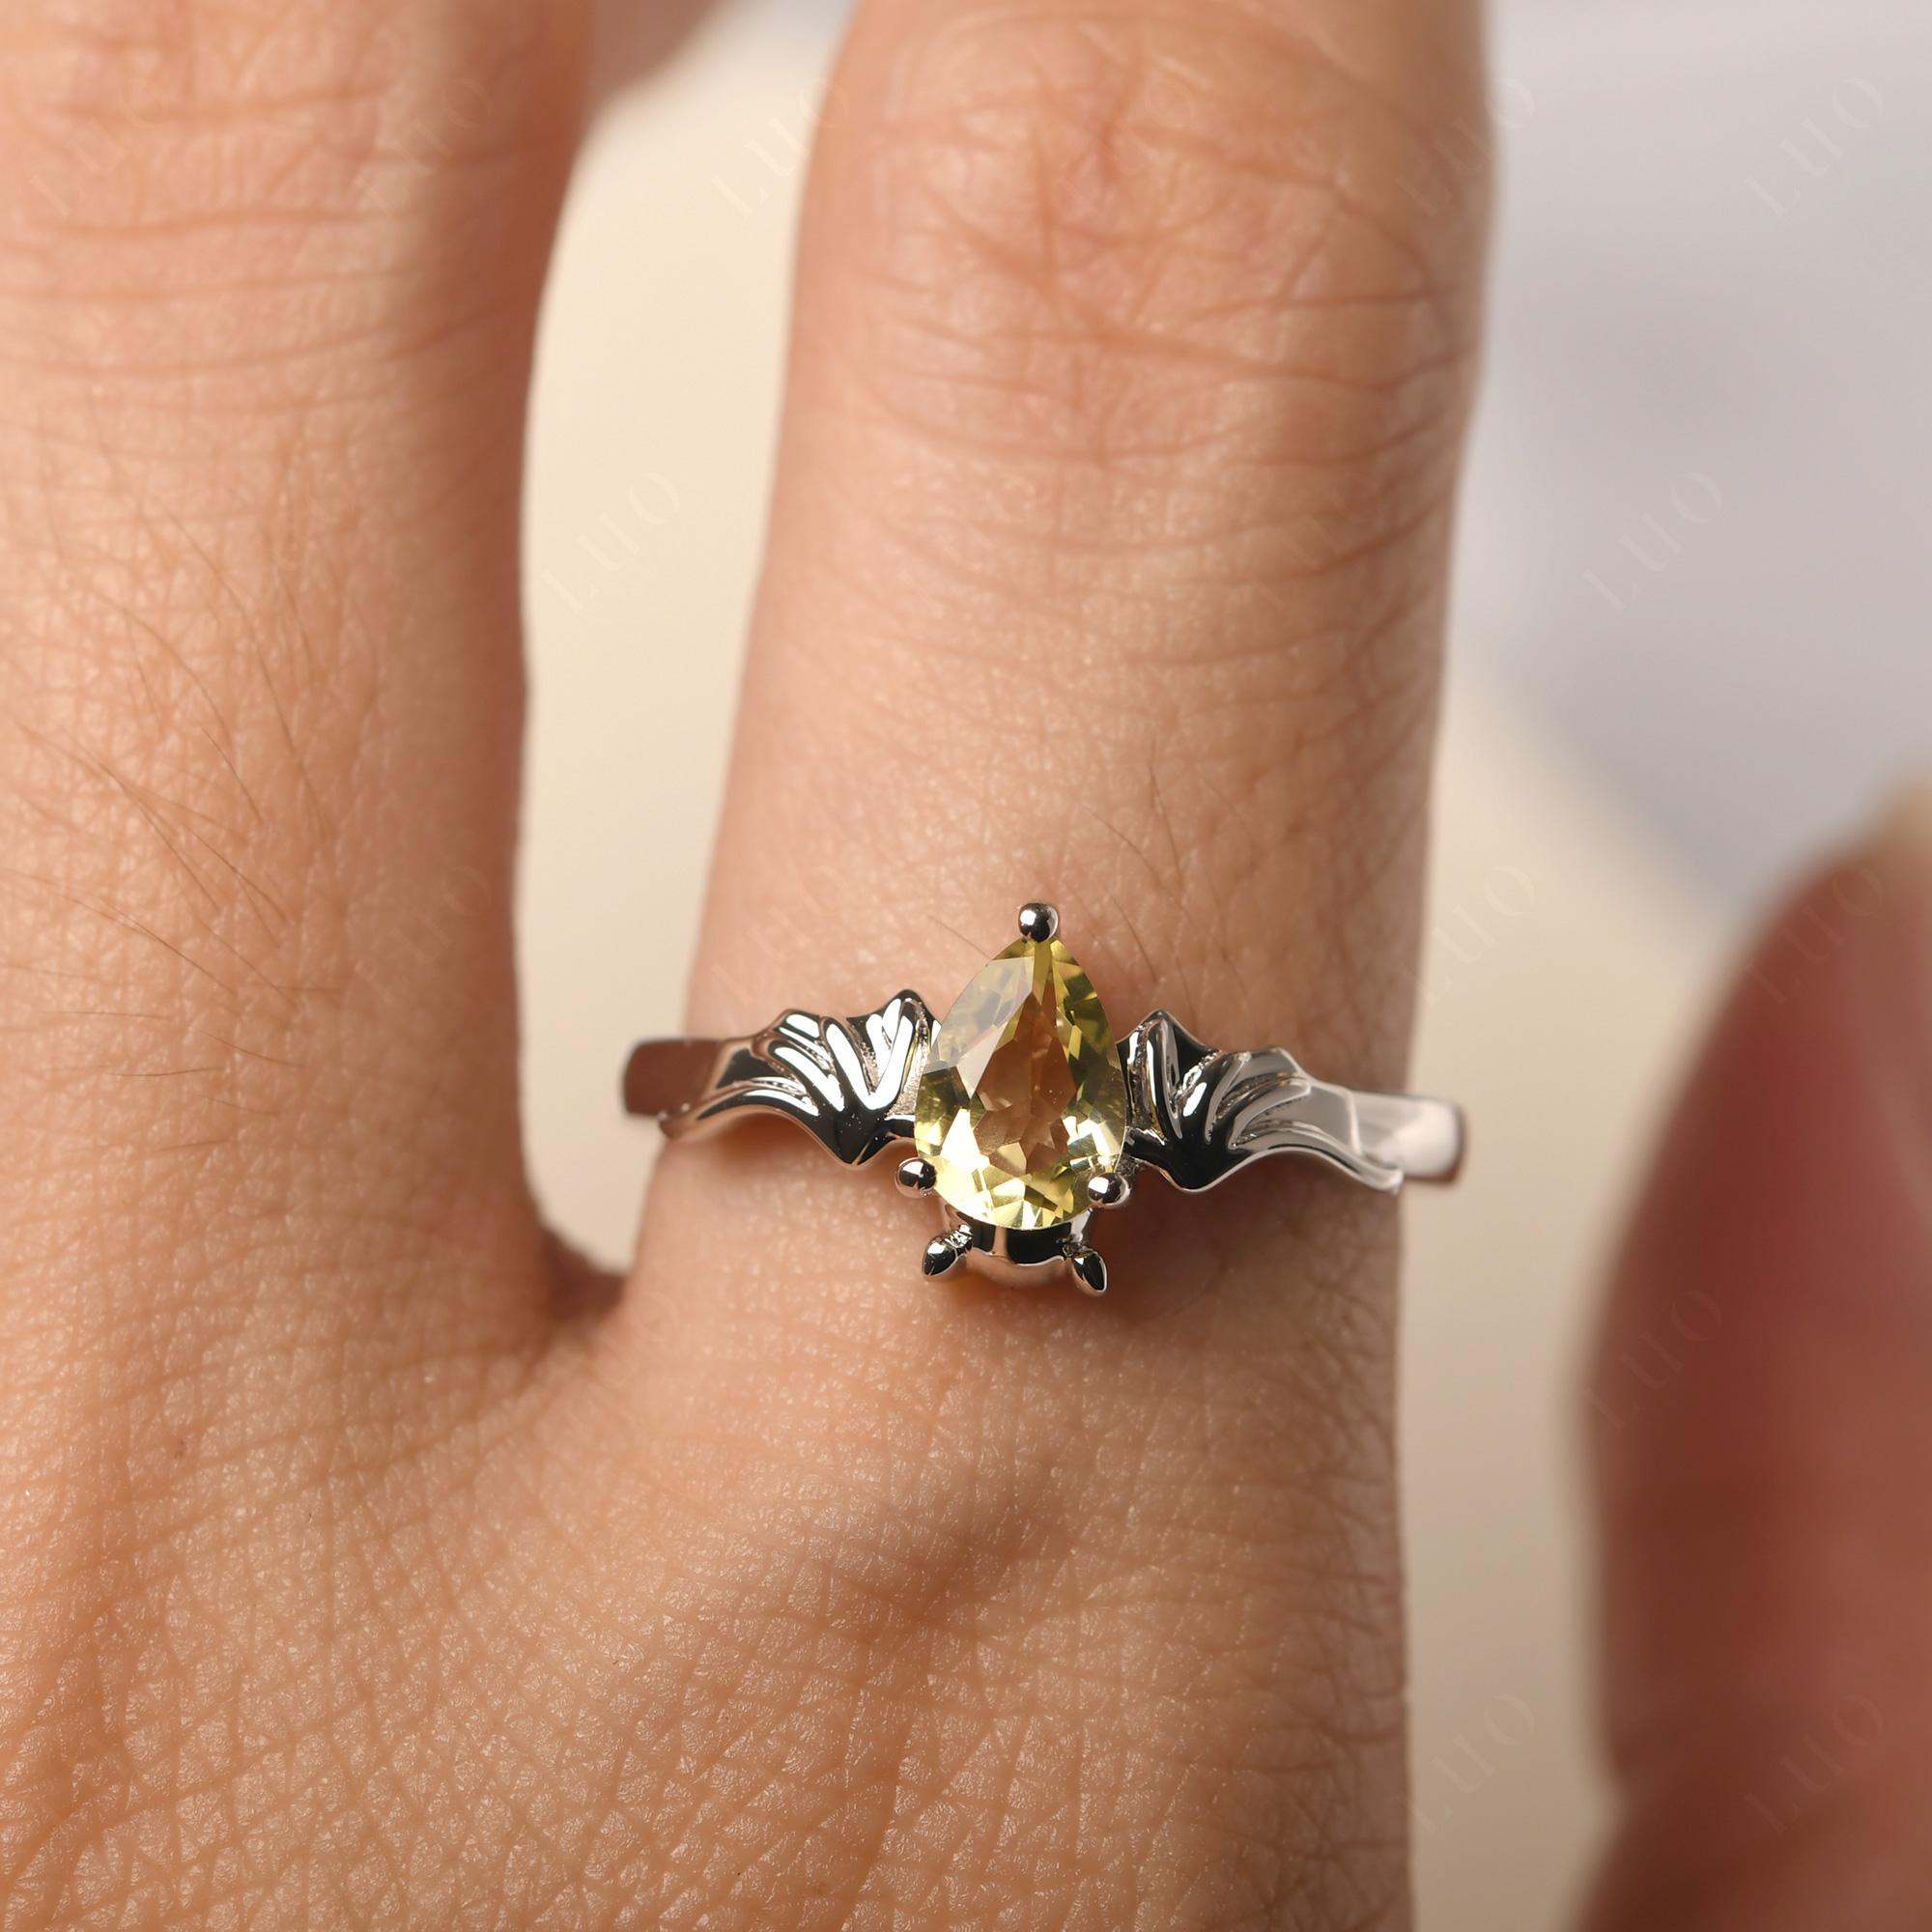 Lemon Quartz Bat Engagement Ring - LUO Jewelry